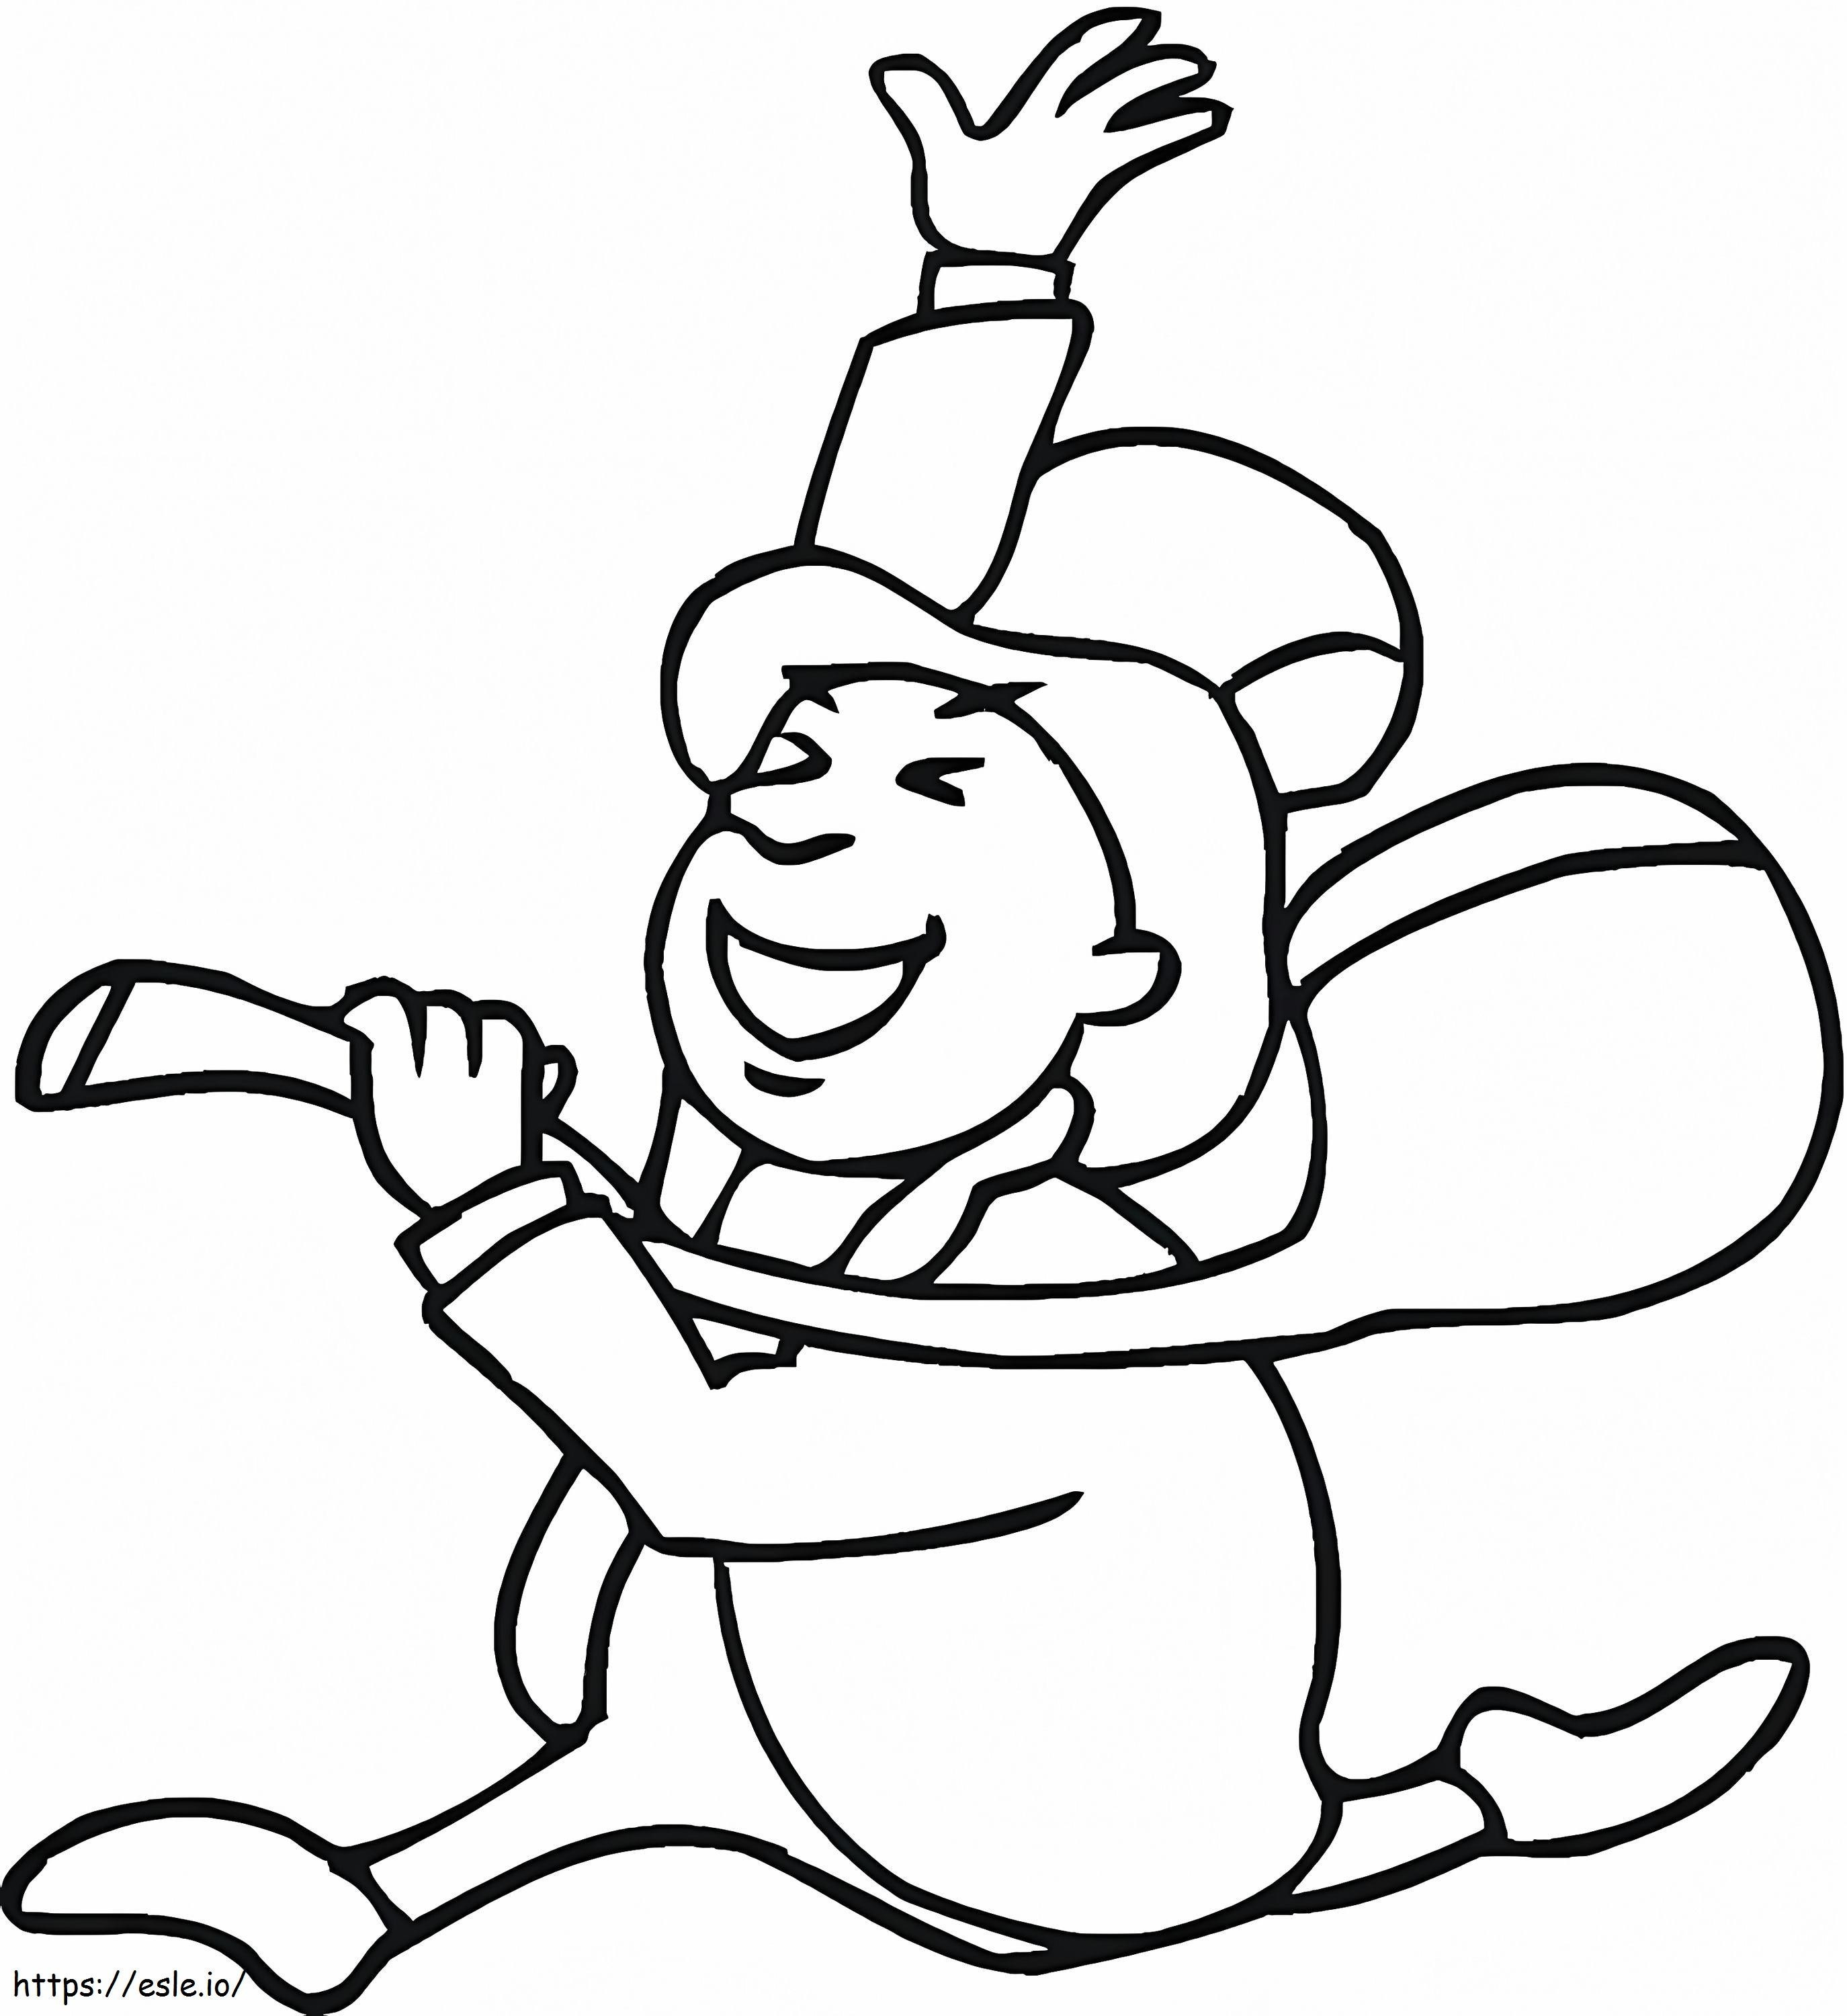 Happy Leprechaun Running coloring page